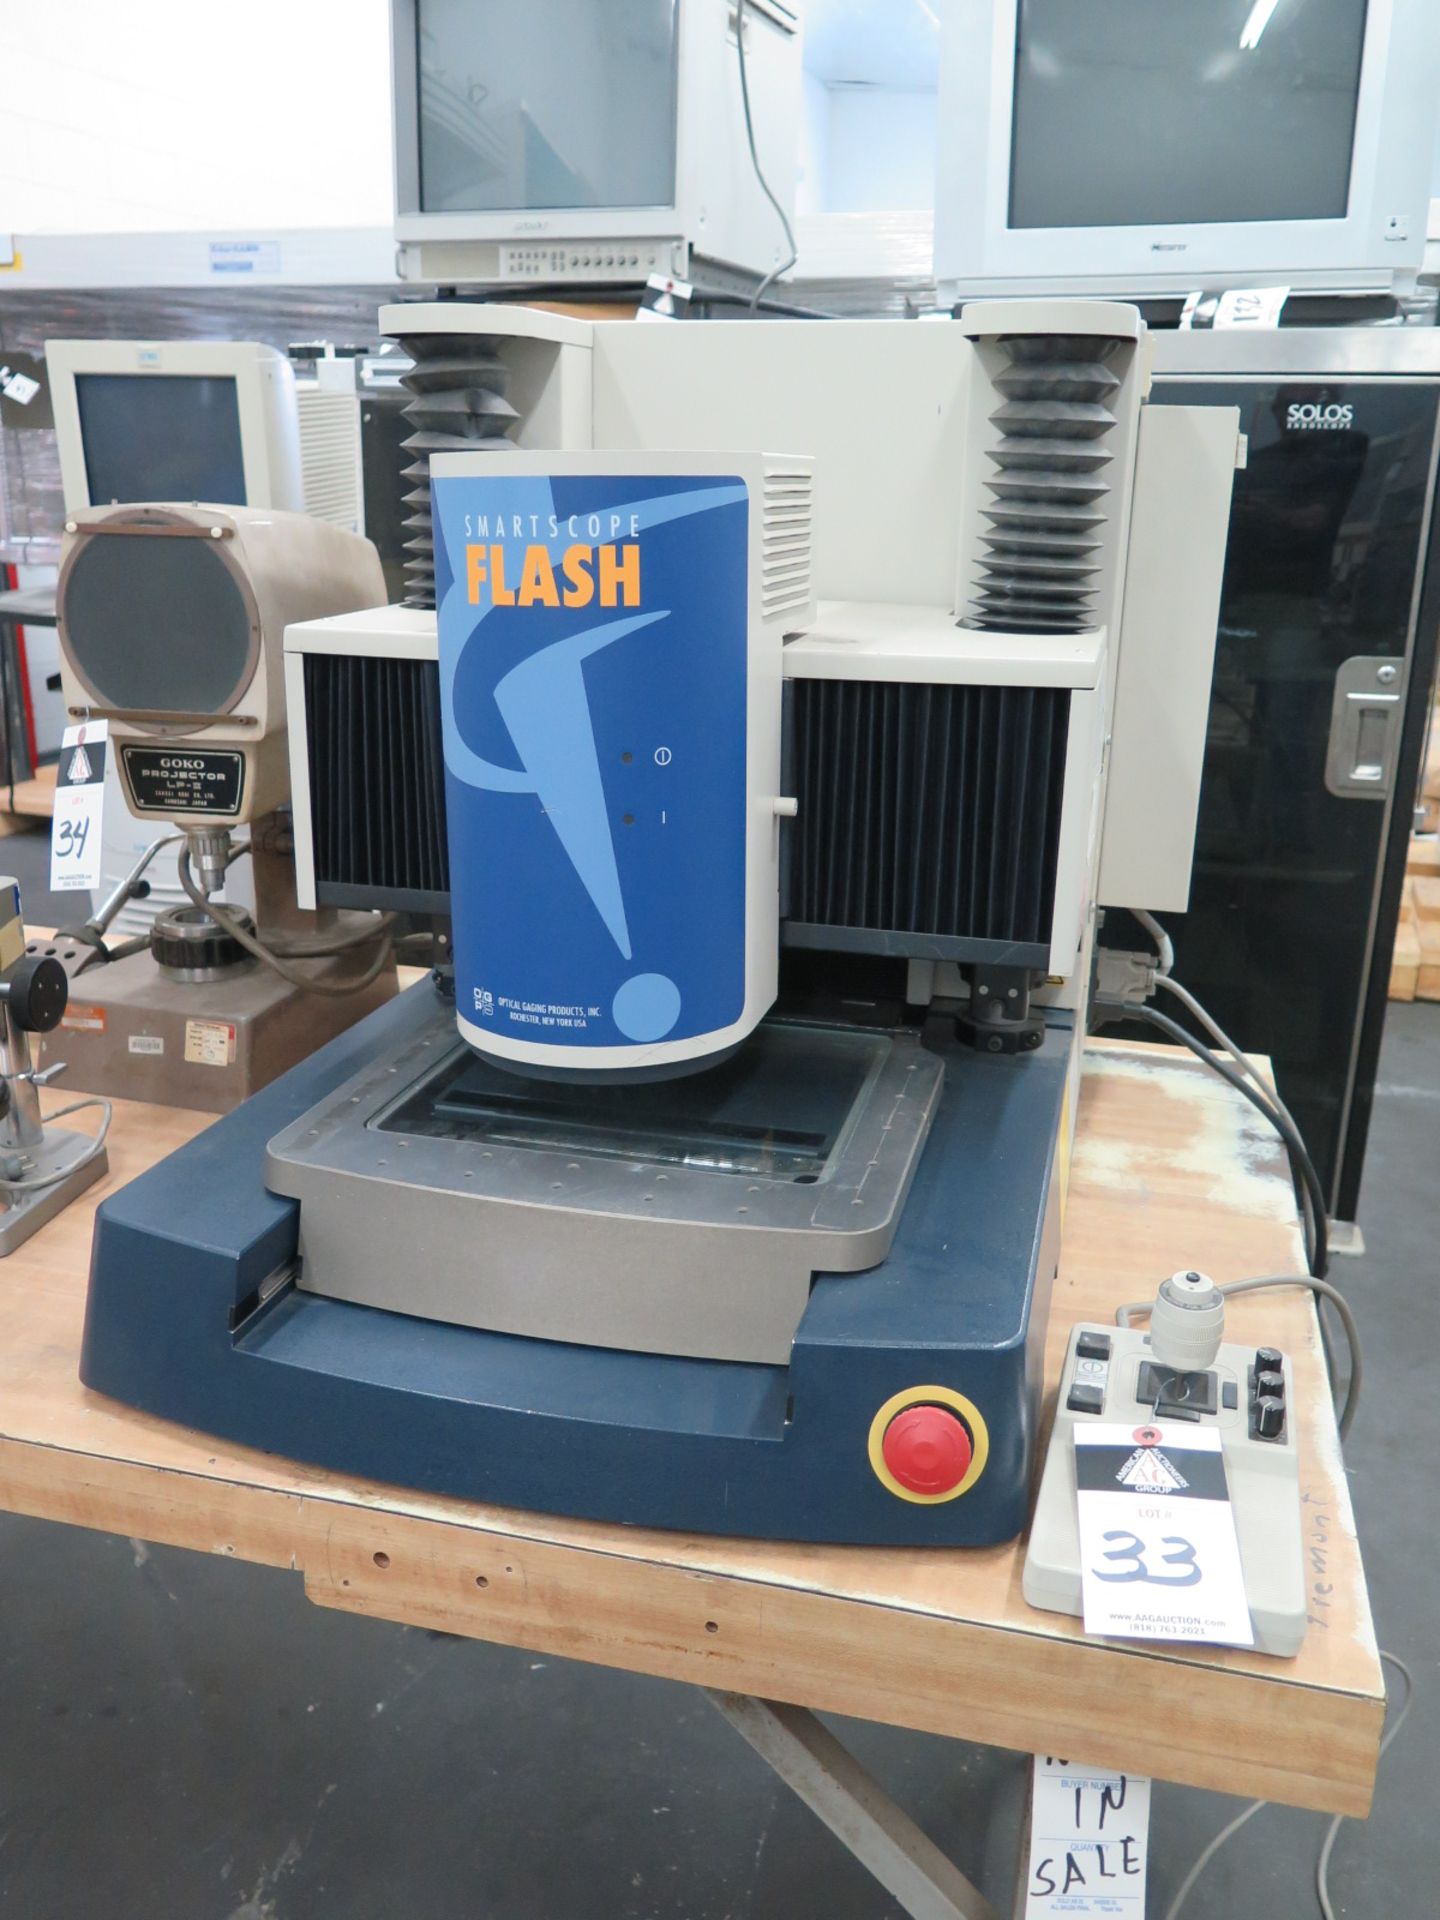 2000 OGP Optical Gauging Products “Smartscope Flash” Video Measuring System s/n SVW1106 w/